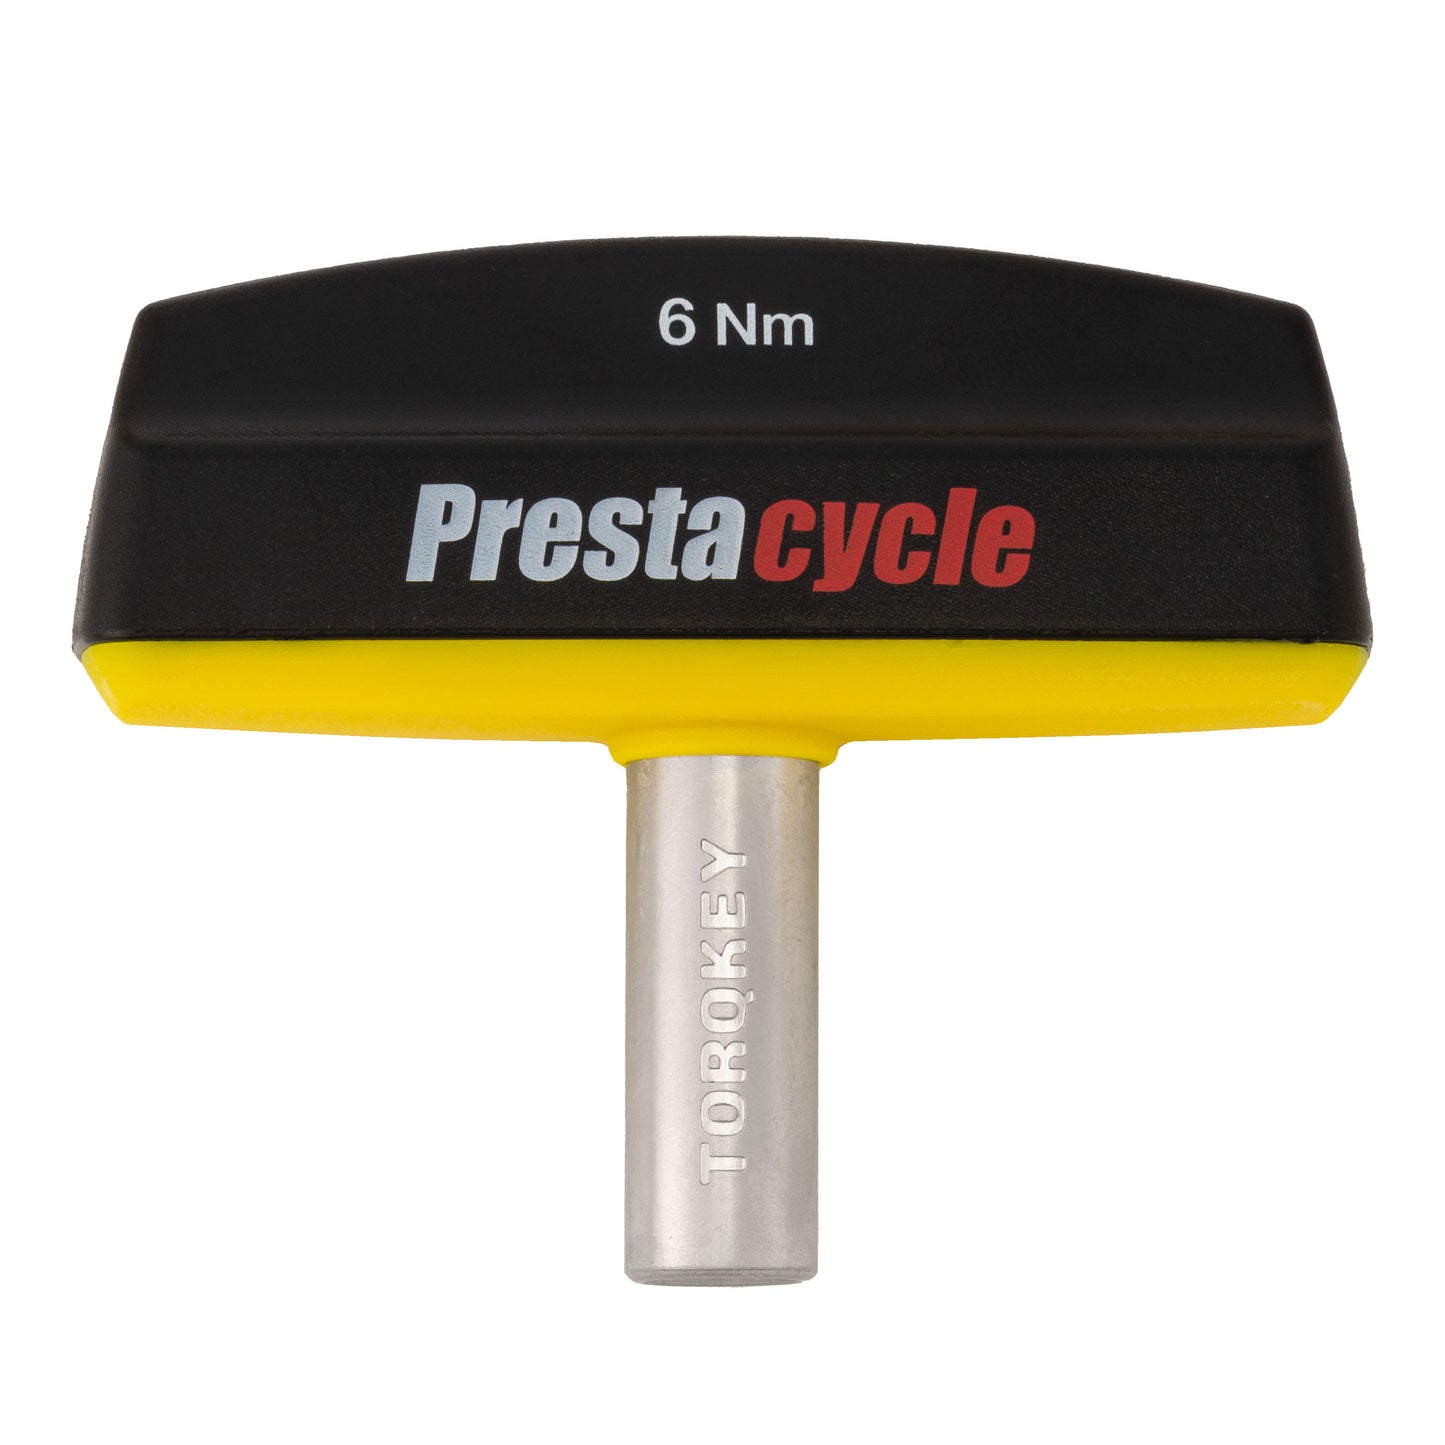 Prestacycle Pro TorqKeys - 6Nm T-Handle Torque-Limiting Bits Tool